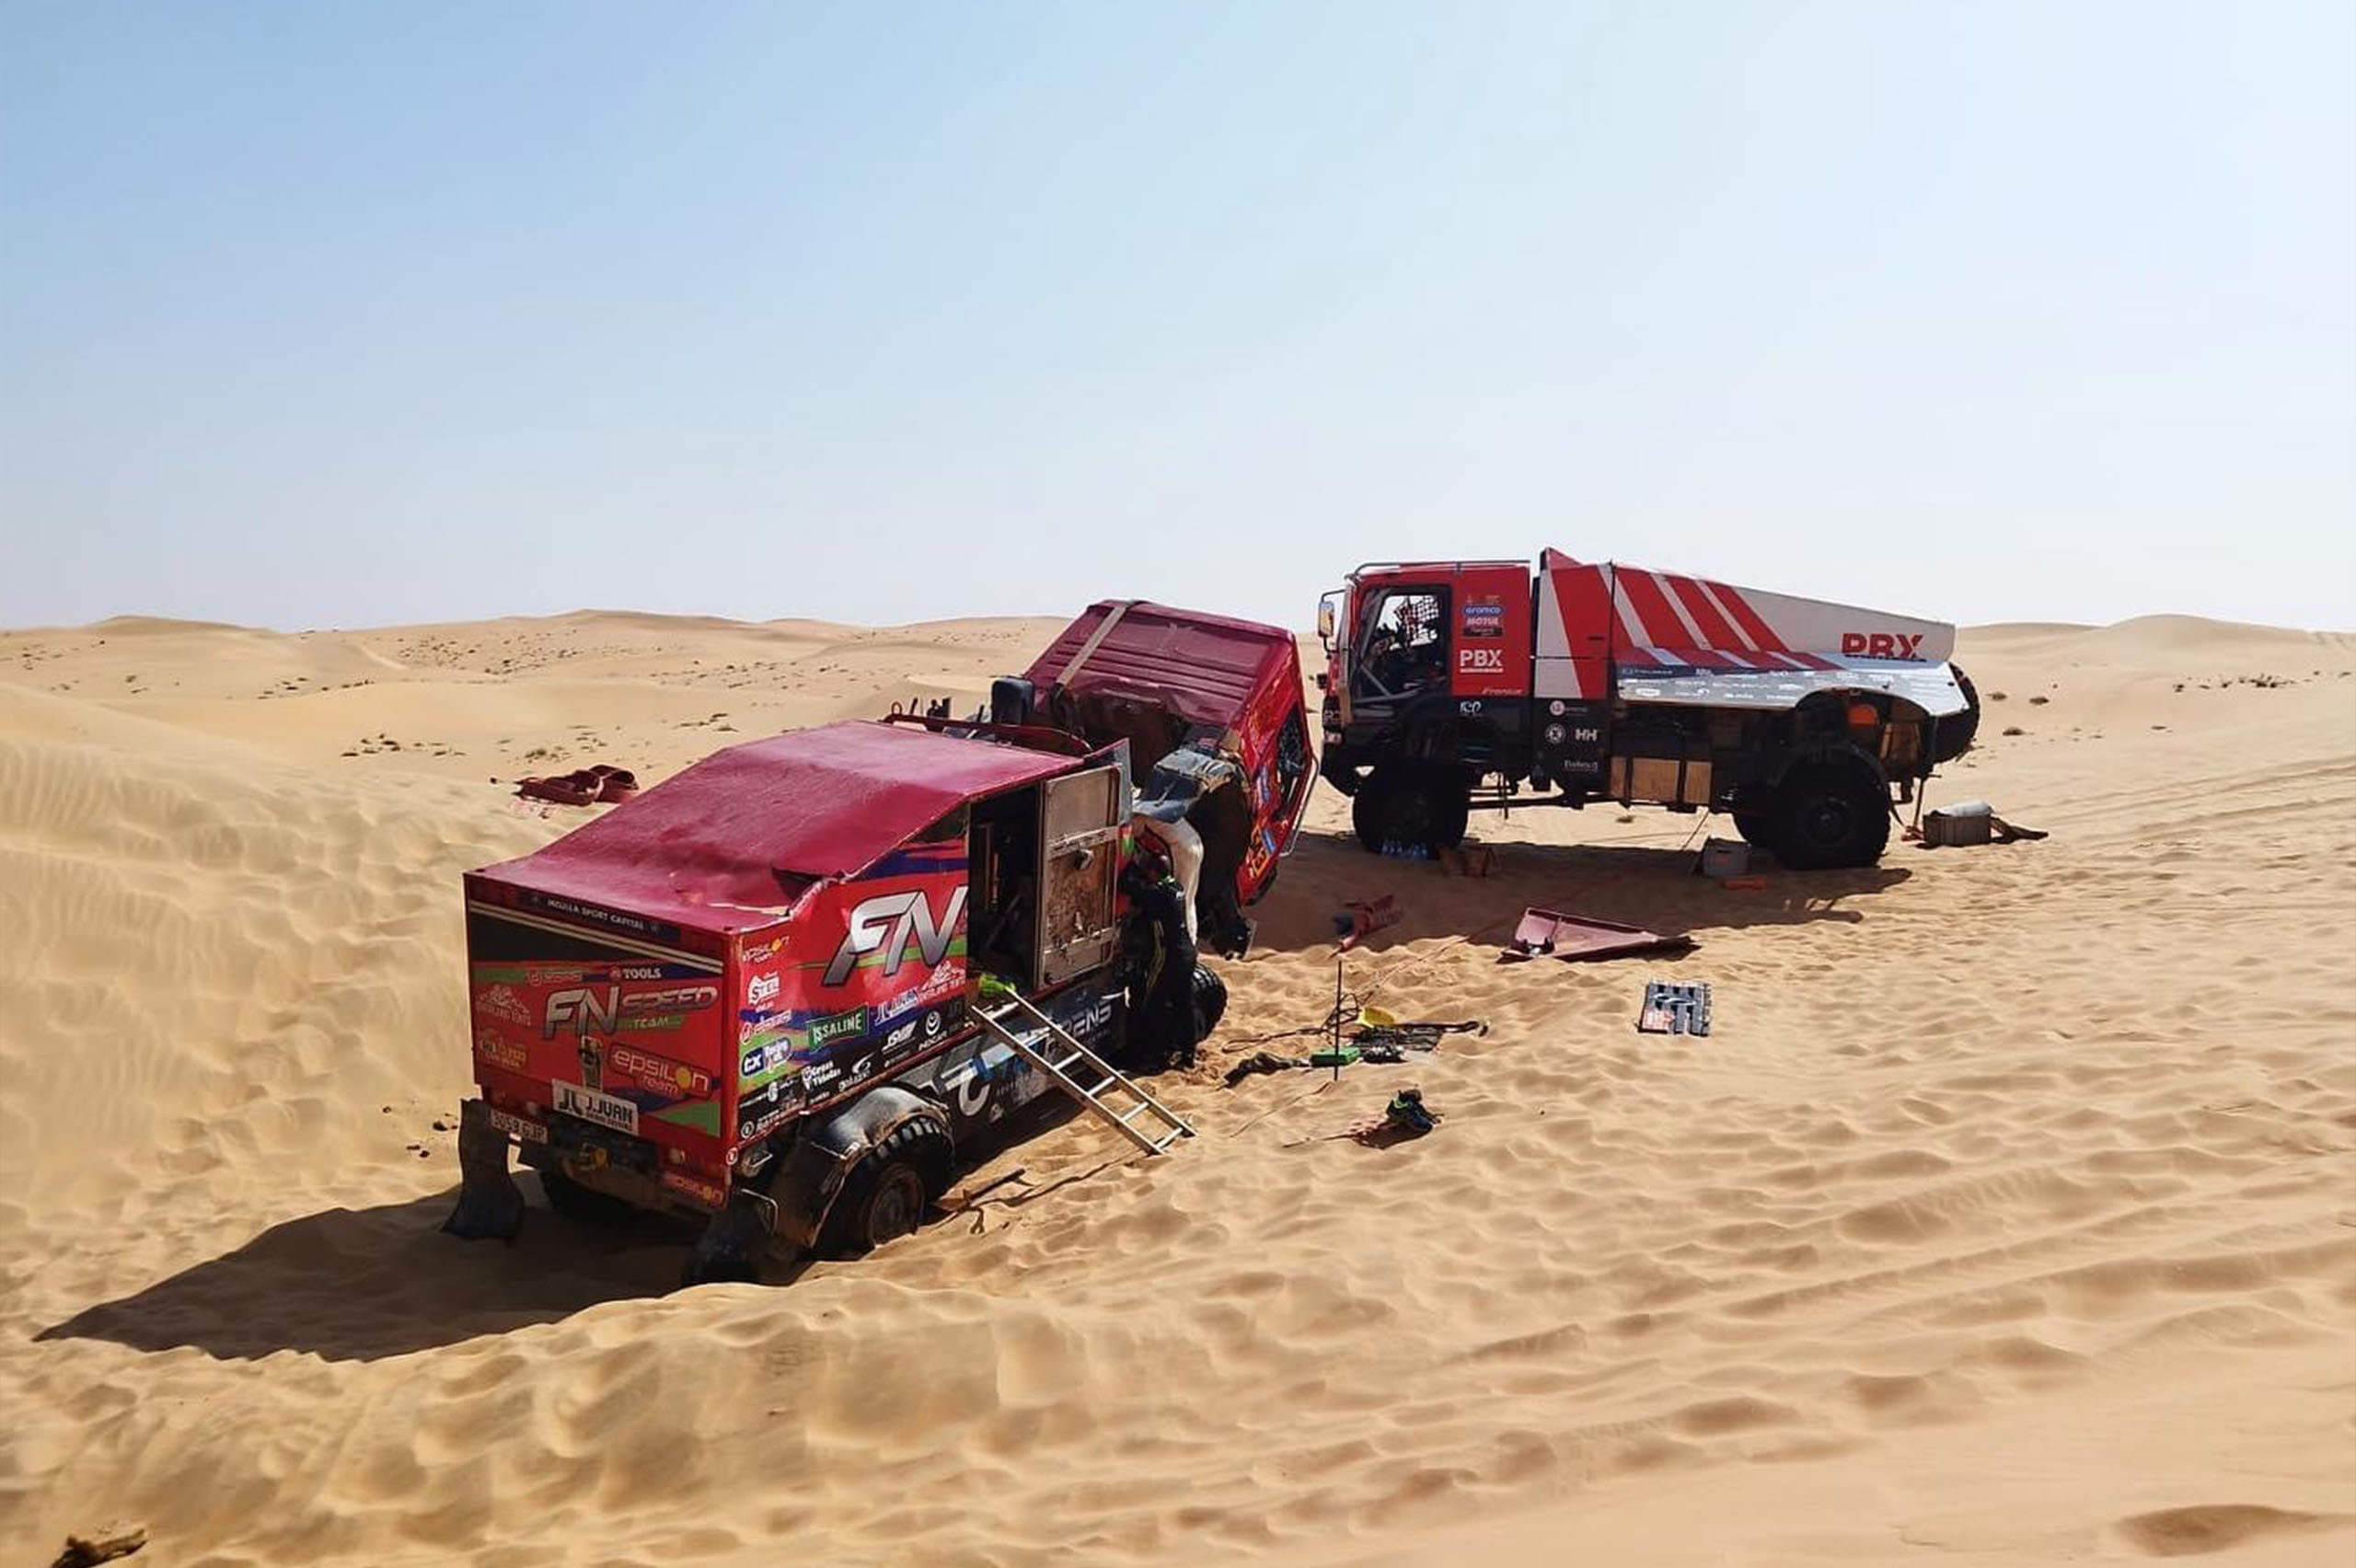 Equipo de asistencia - camion dakar - camion dunas desierto - pbx dakar team - palibex